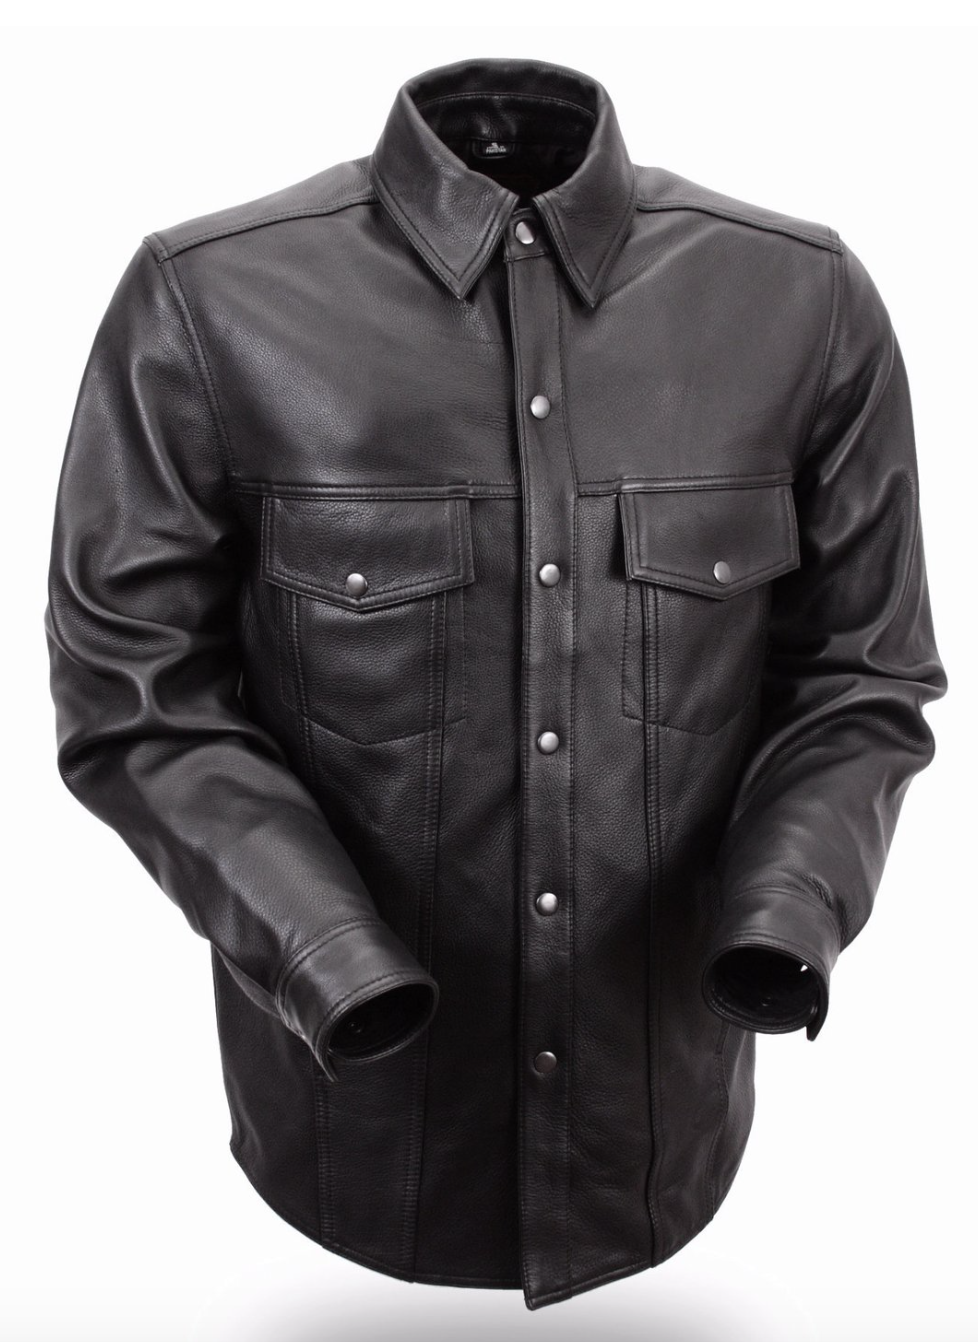 Milestone - Men's Motorcycle Leather Shirt